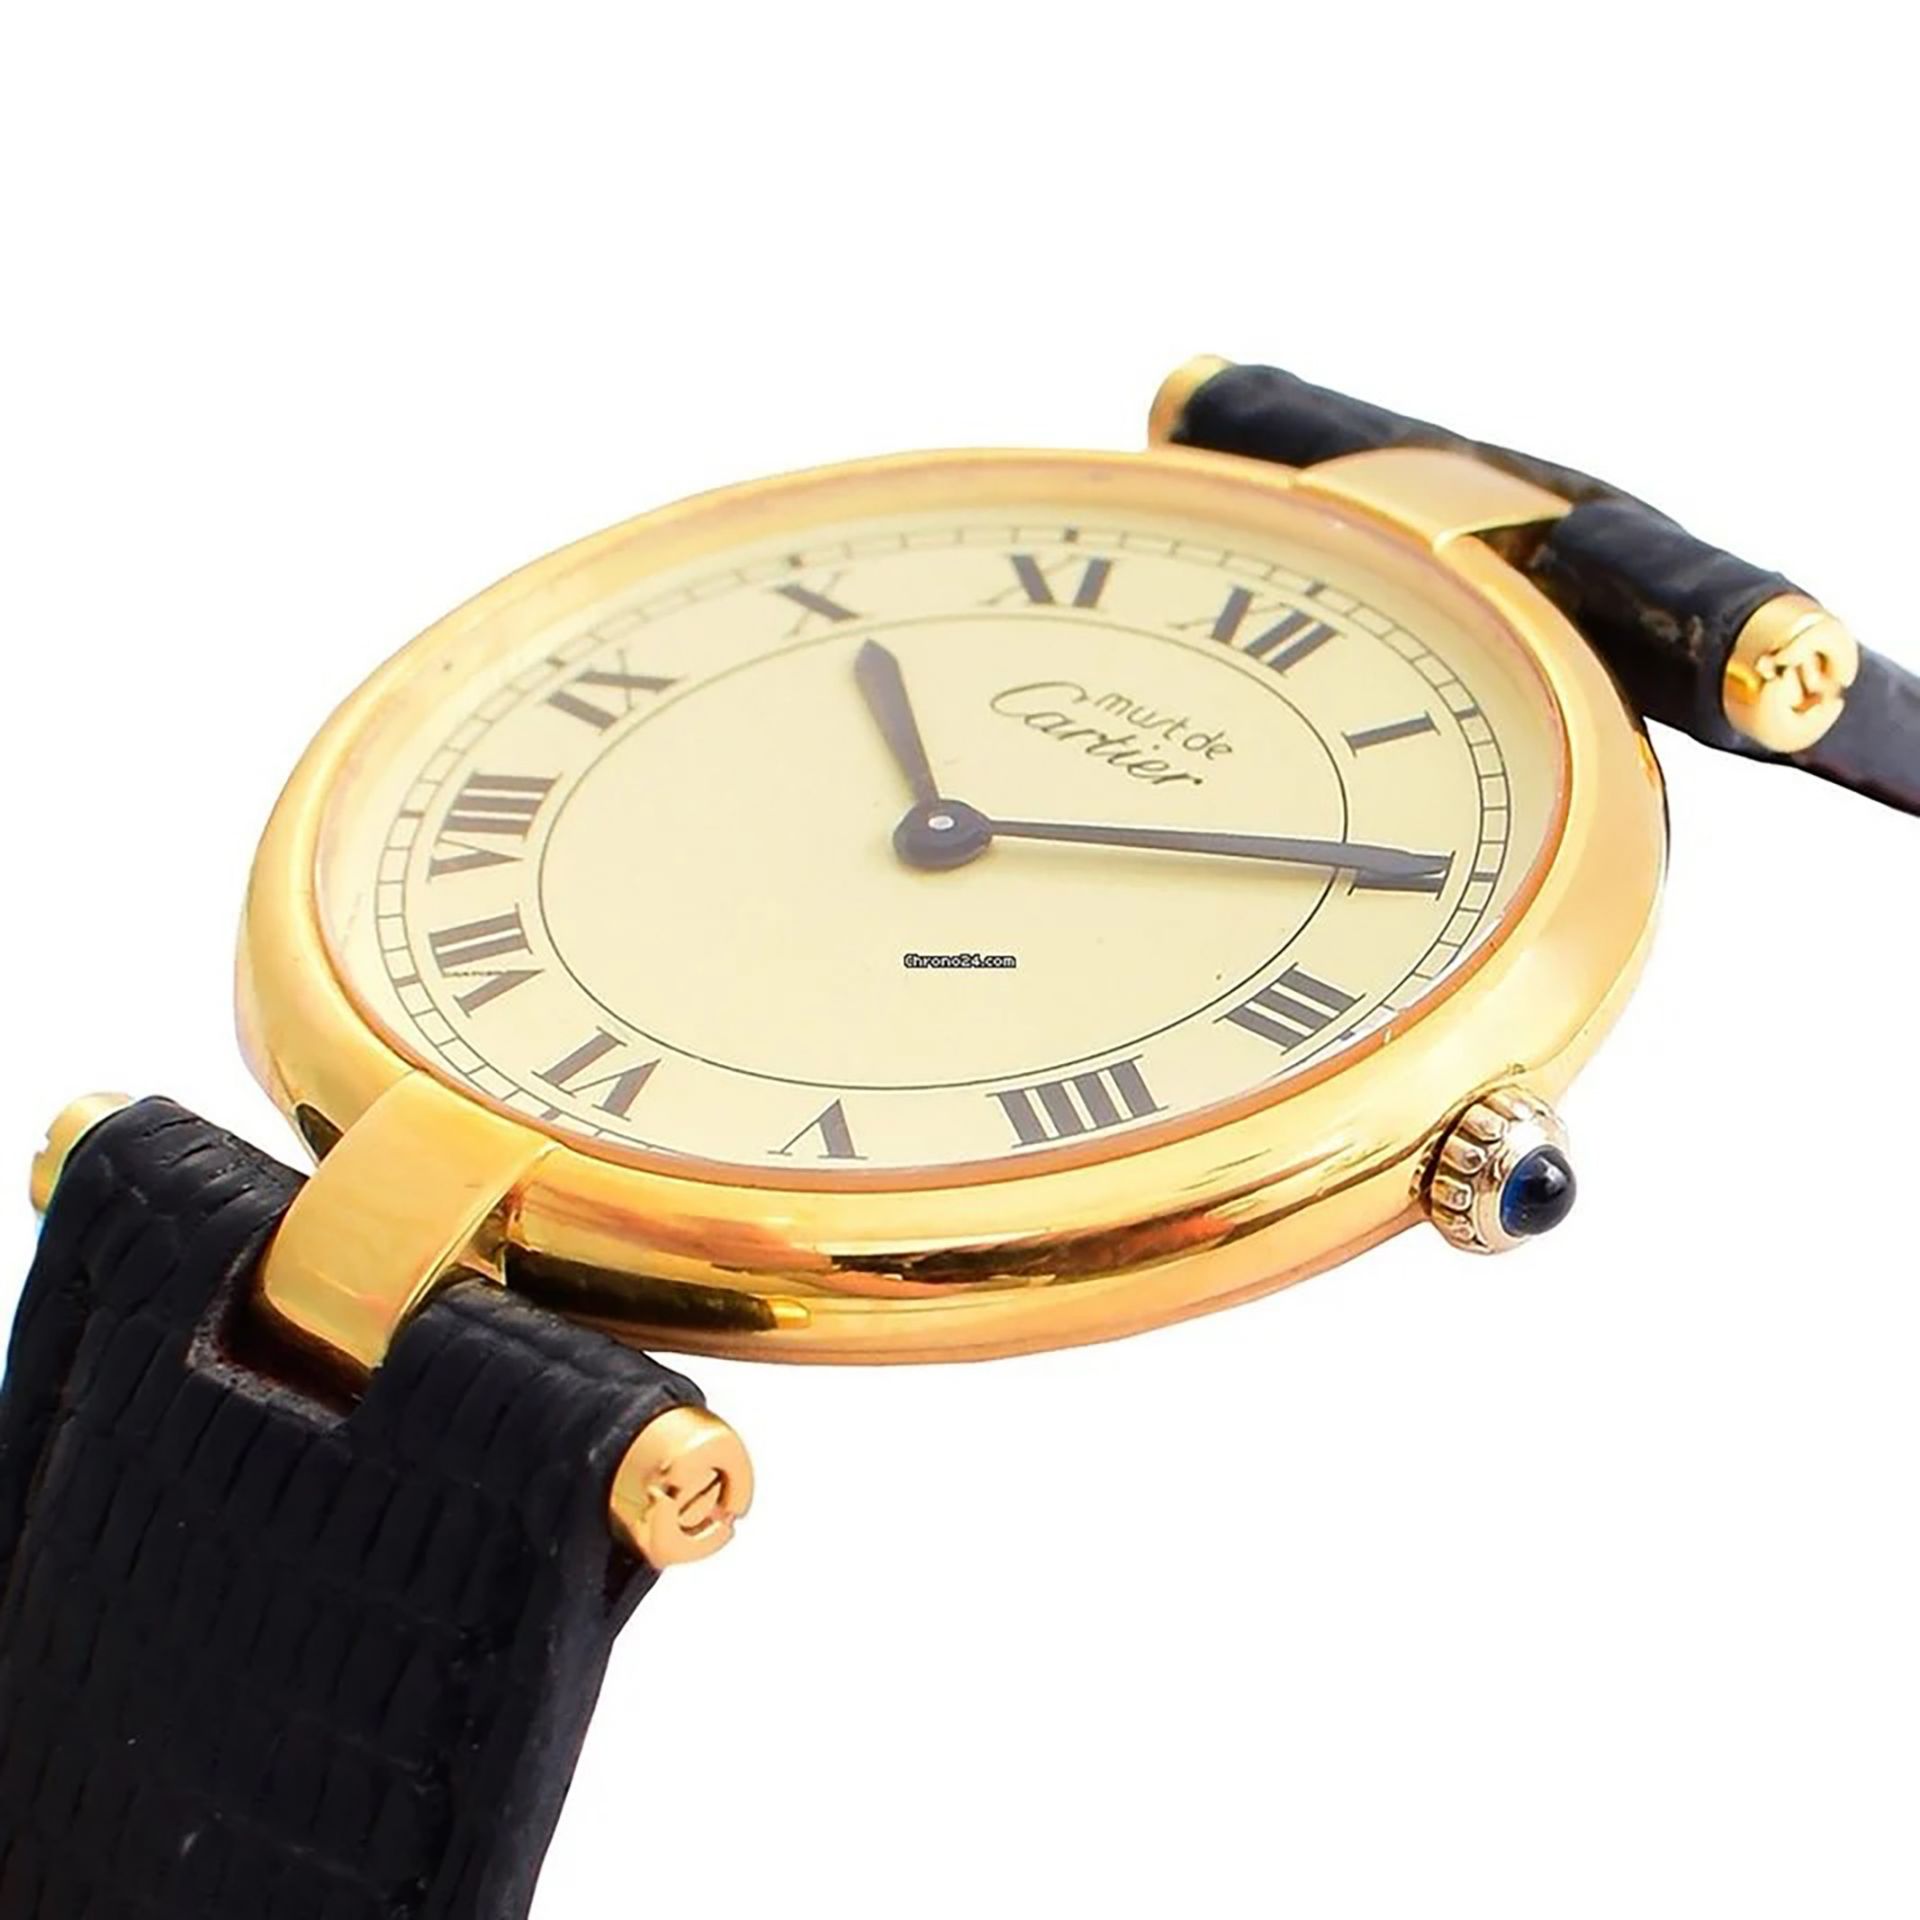 Cartier Vermeil Must wristwatch - Image 2 of 6